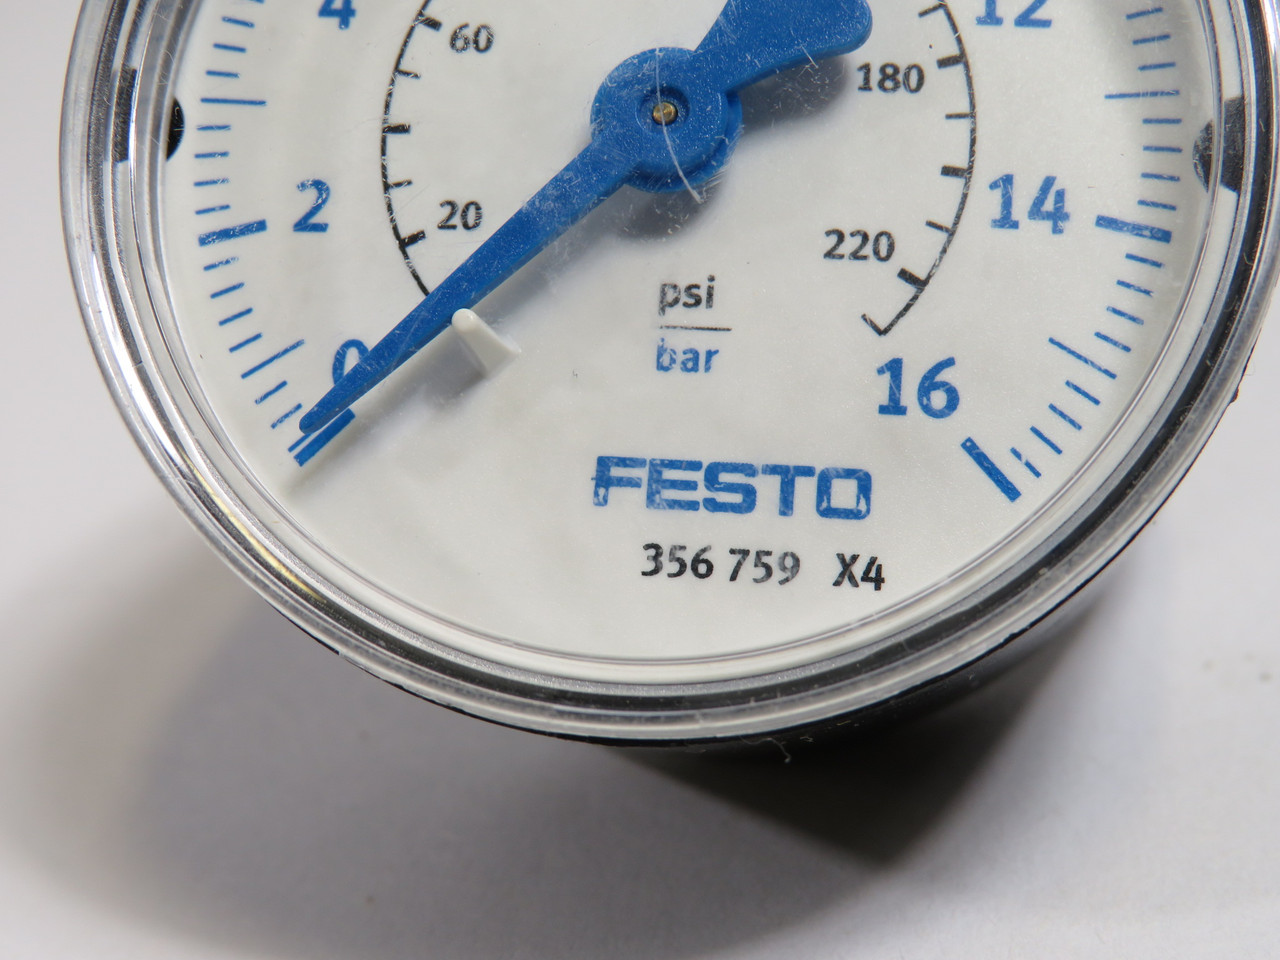 Festo 356759 MA-50-16-1/4 Pressure Gauge 0-230psi 0-16bar 2"D 1/4" Port USED